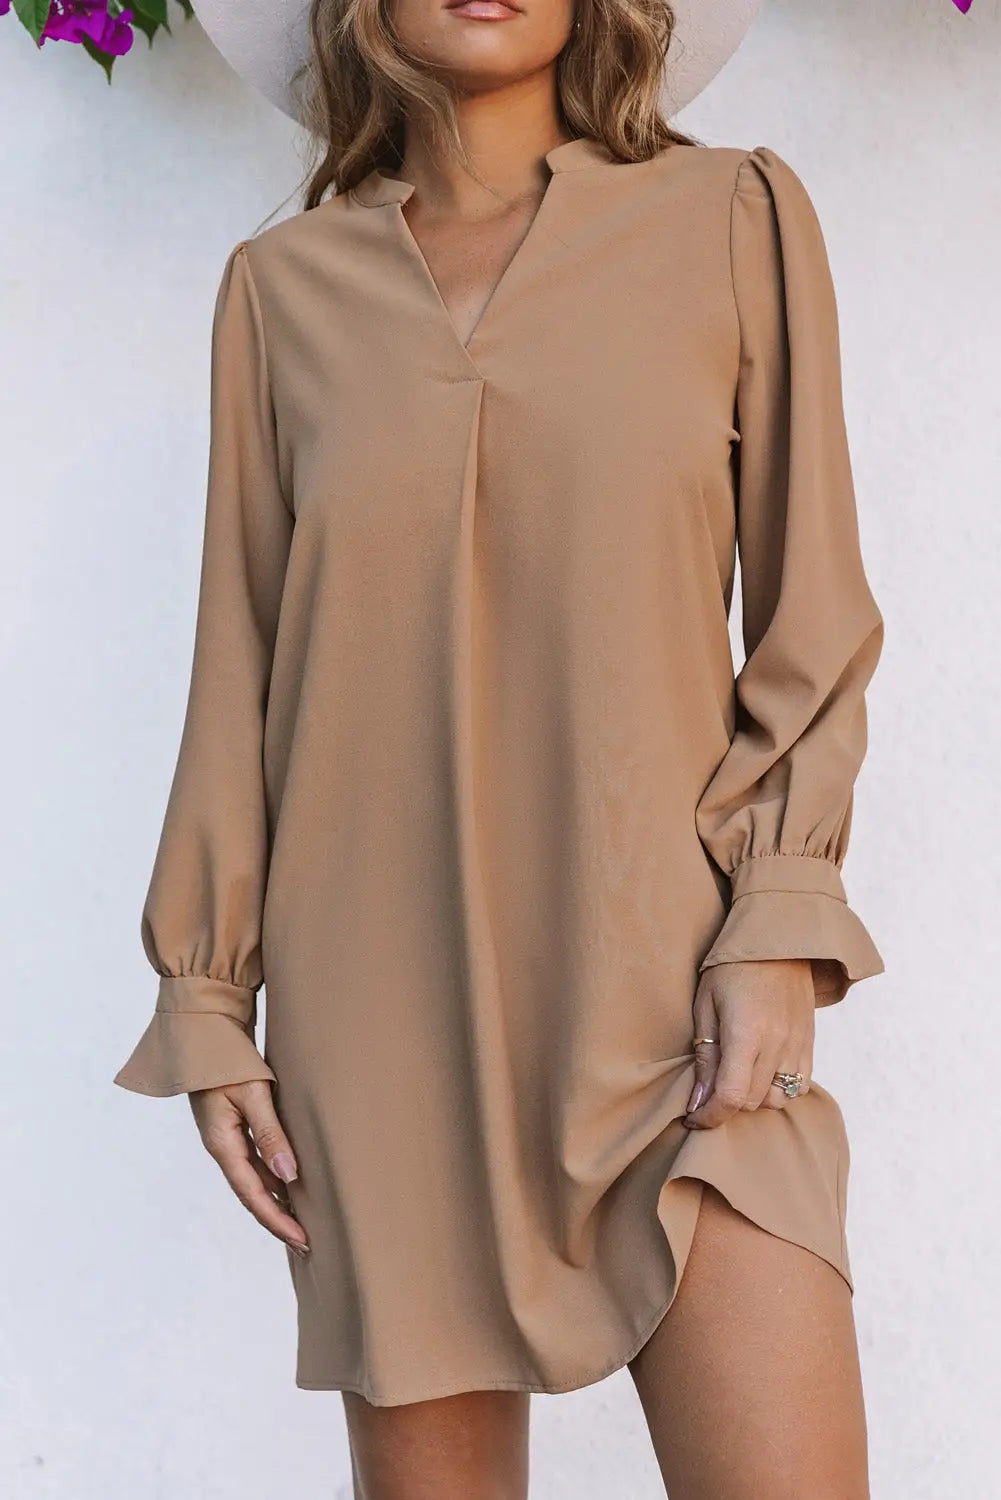 Black split v neck ruffled sleeves shirt dress - apricot / s / 100% polyester - mini dresses